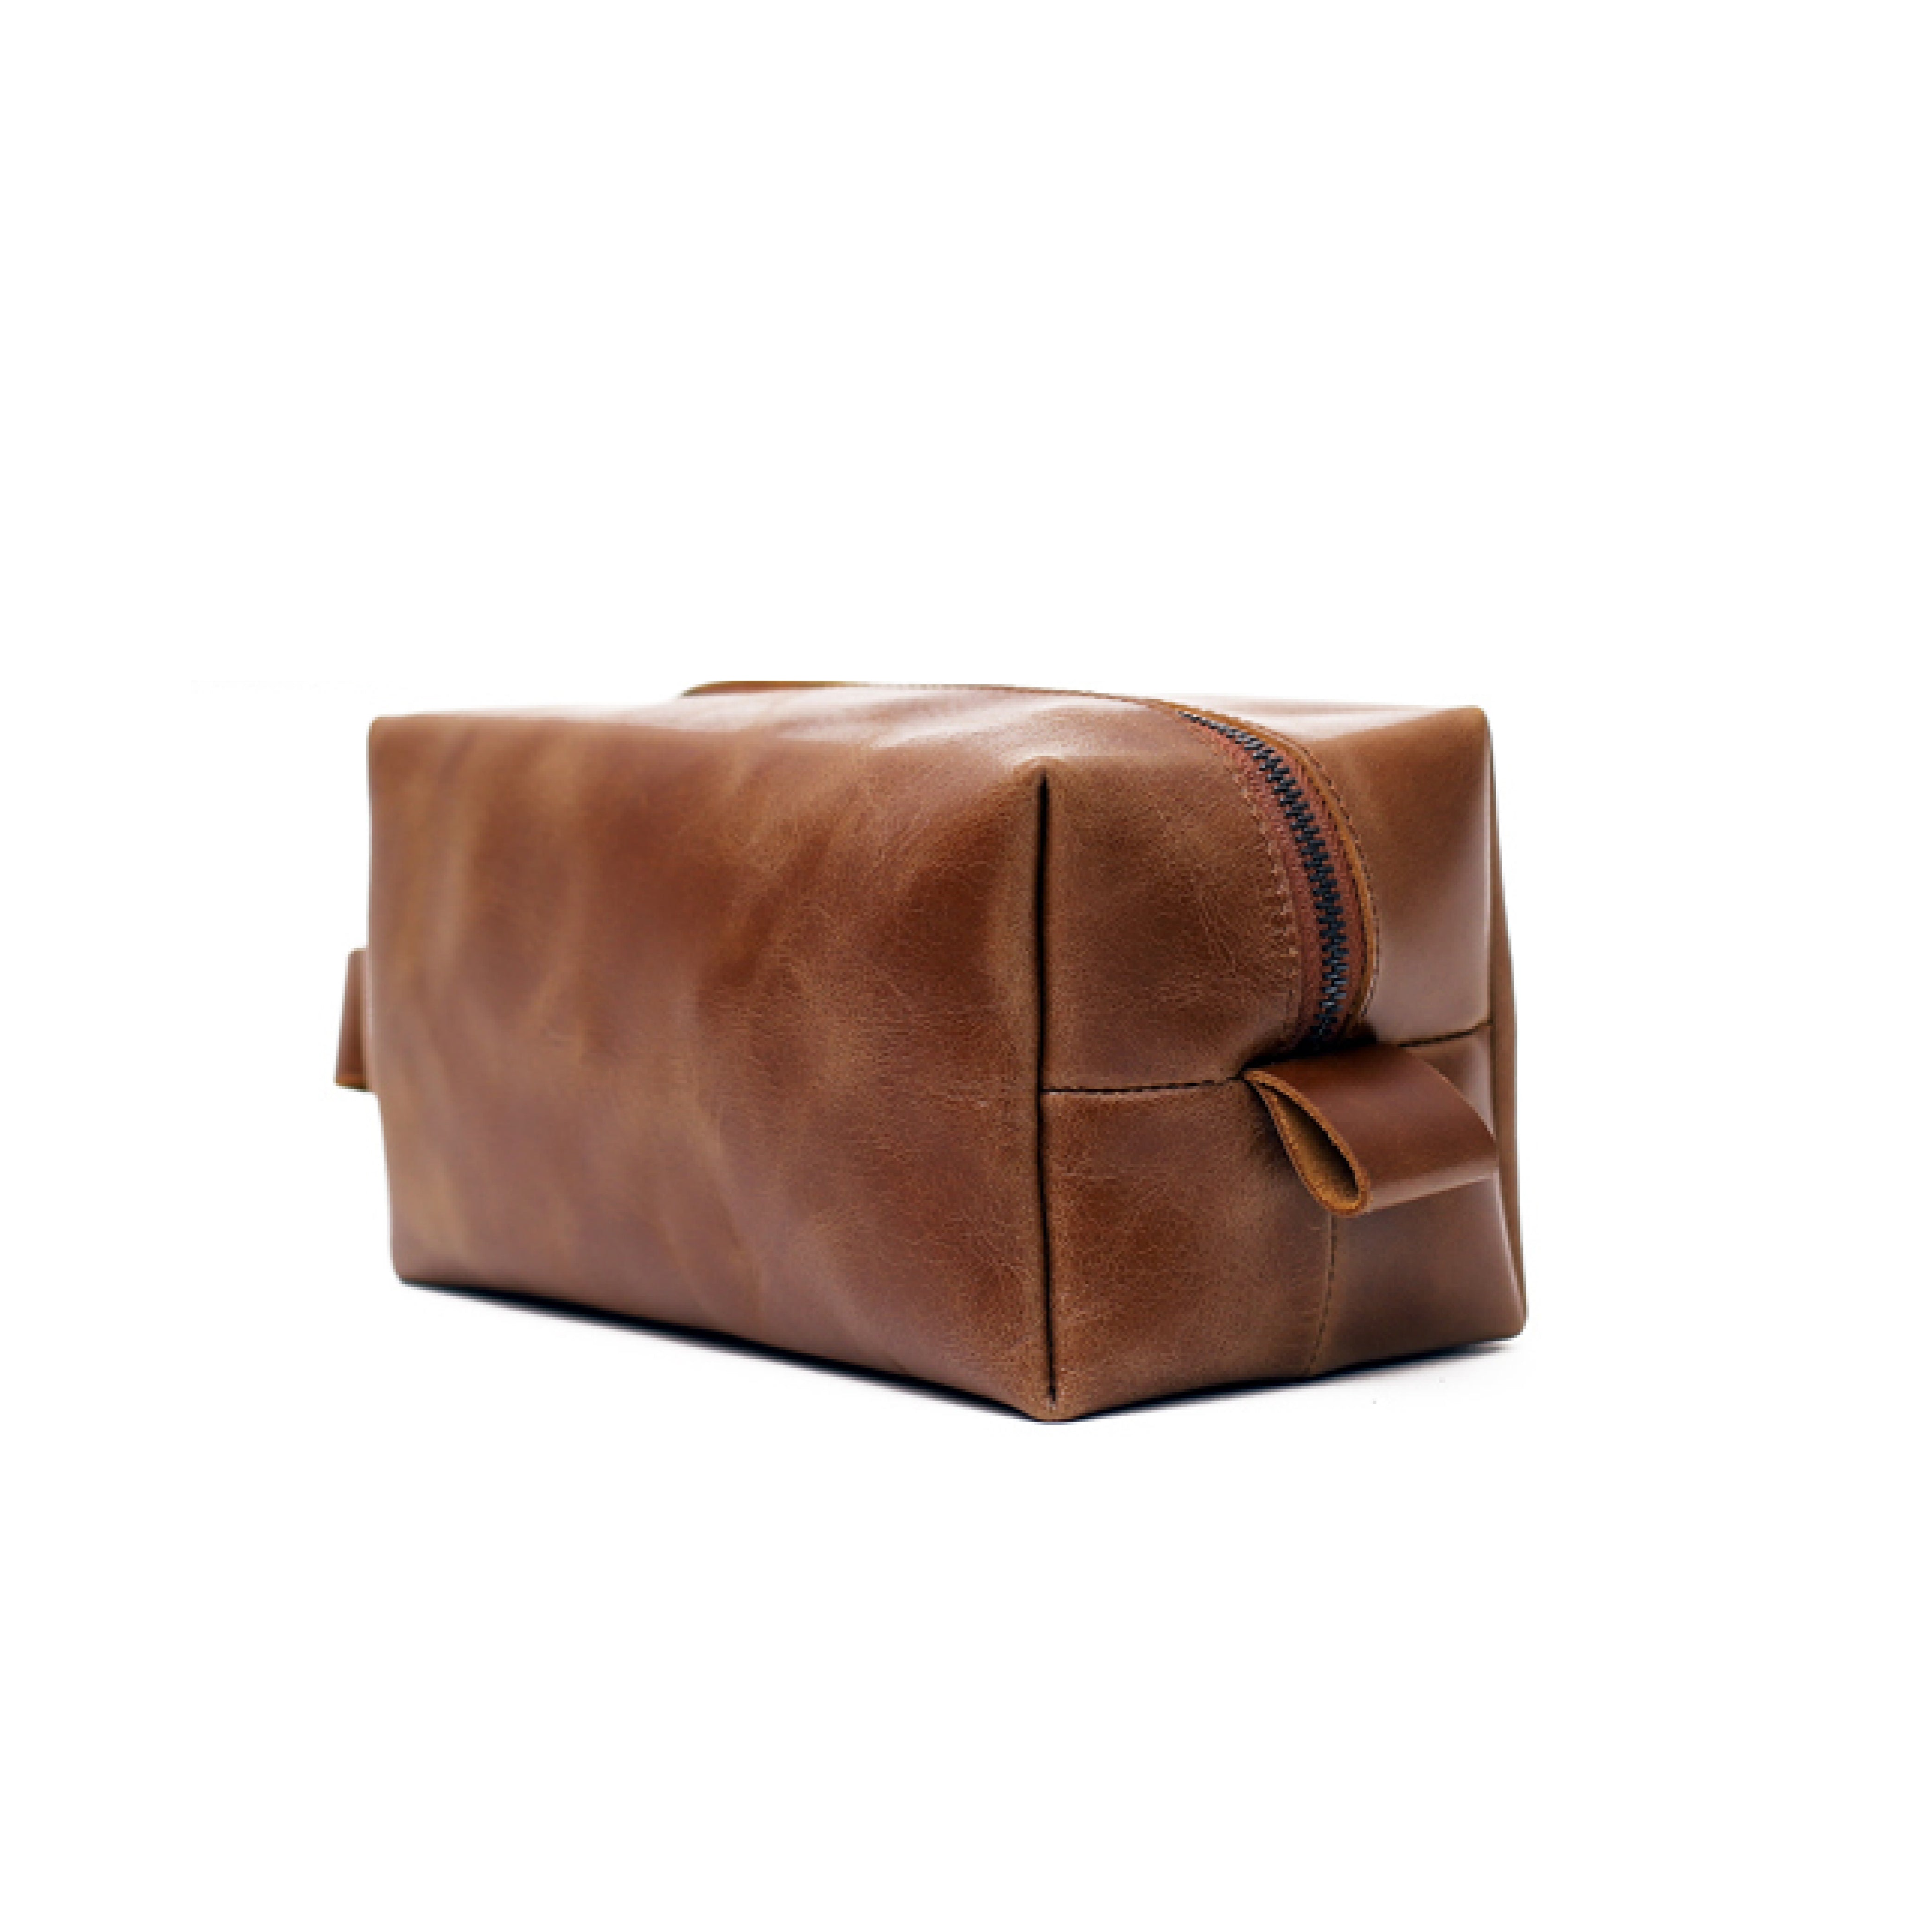 Vintage Chocolate Brown Real Leather Toiletry Bag